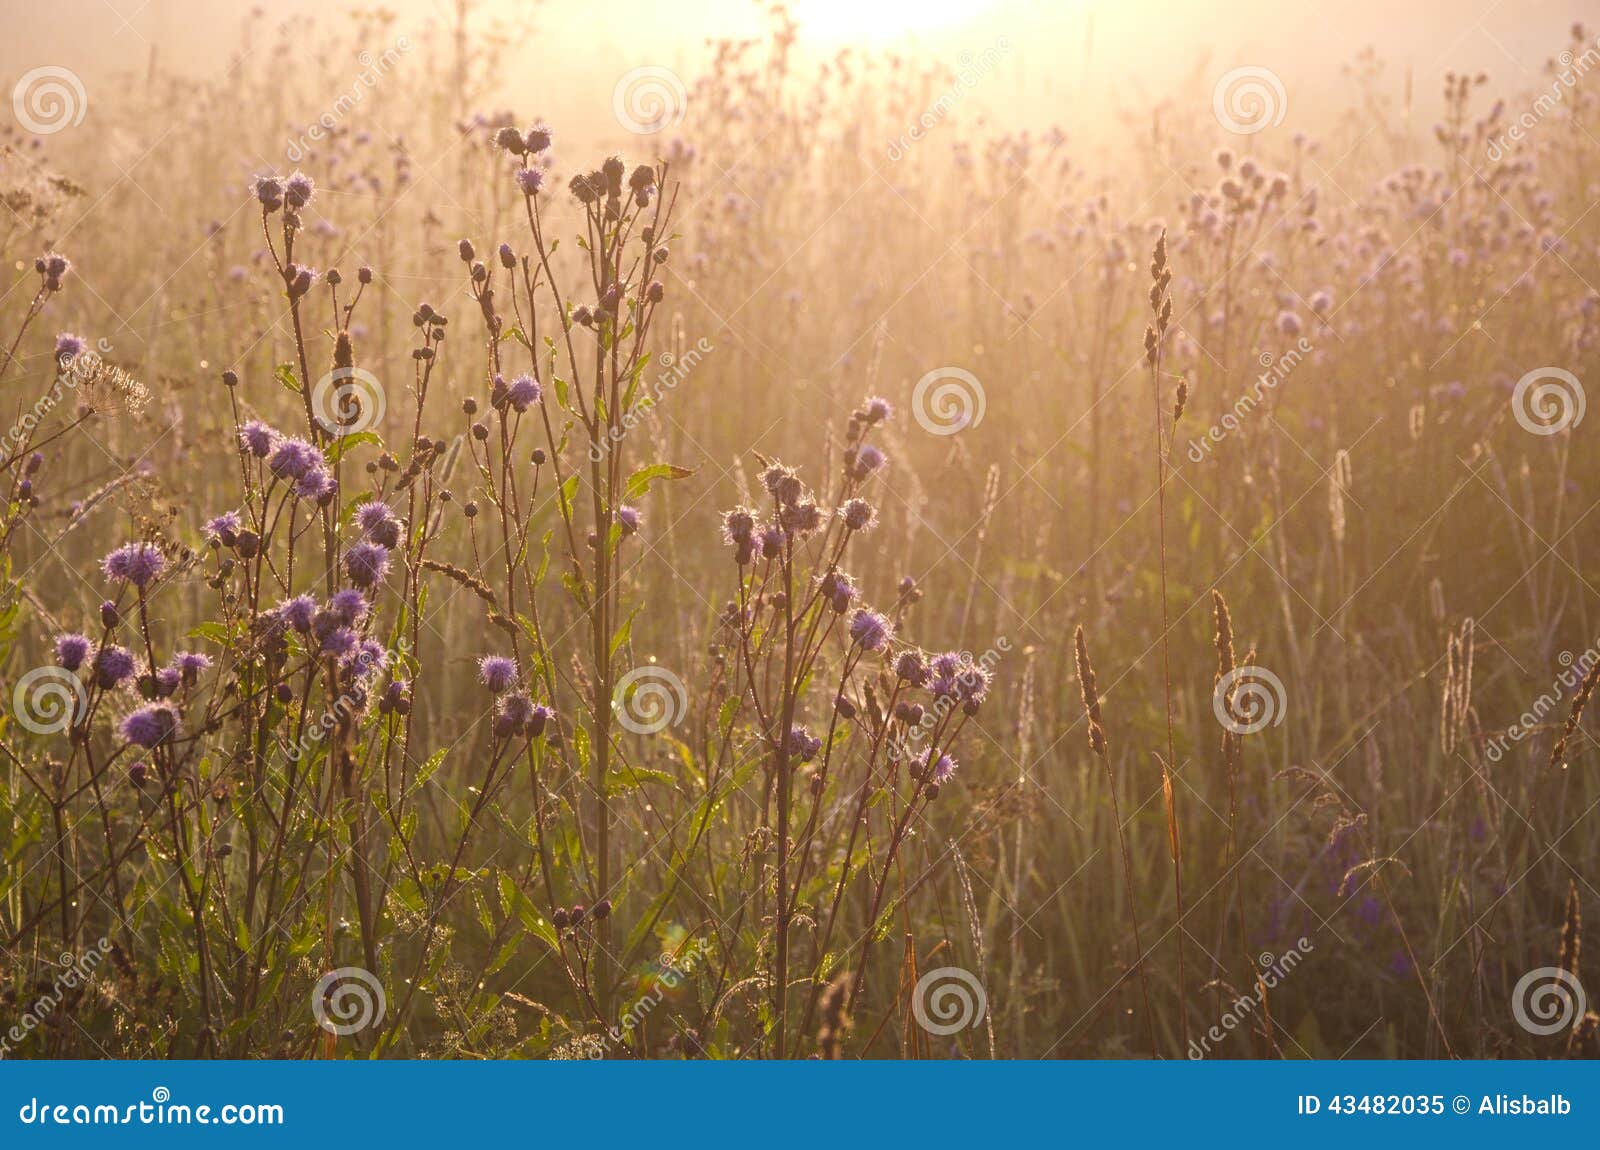 Dewy Beautiful Summer Morning Grass and Sunrise Sunlight Stock Image